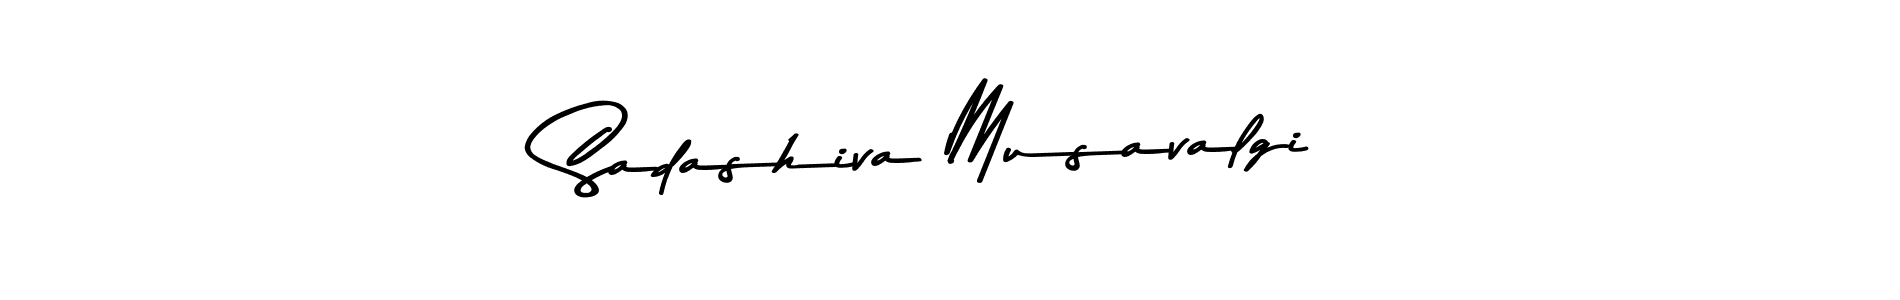 How to Draw Sadashiva Musavalgi signature style? Asem Kandis PERSONAL USE is a latest design signature styles for name Sadashiva Musavalgi. Sadashiva Musavalgi signature style 9 images and pictures png